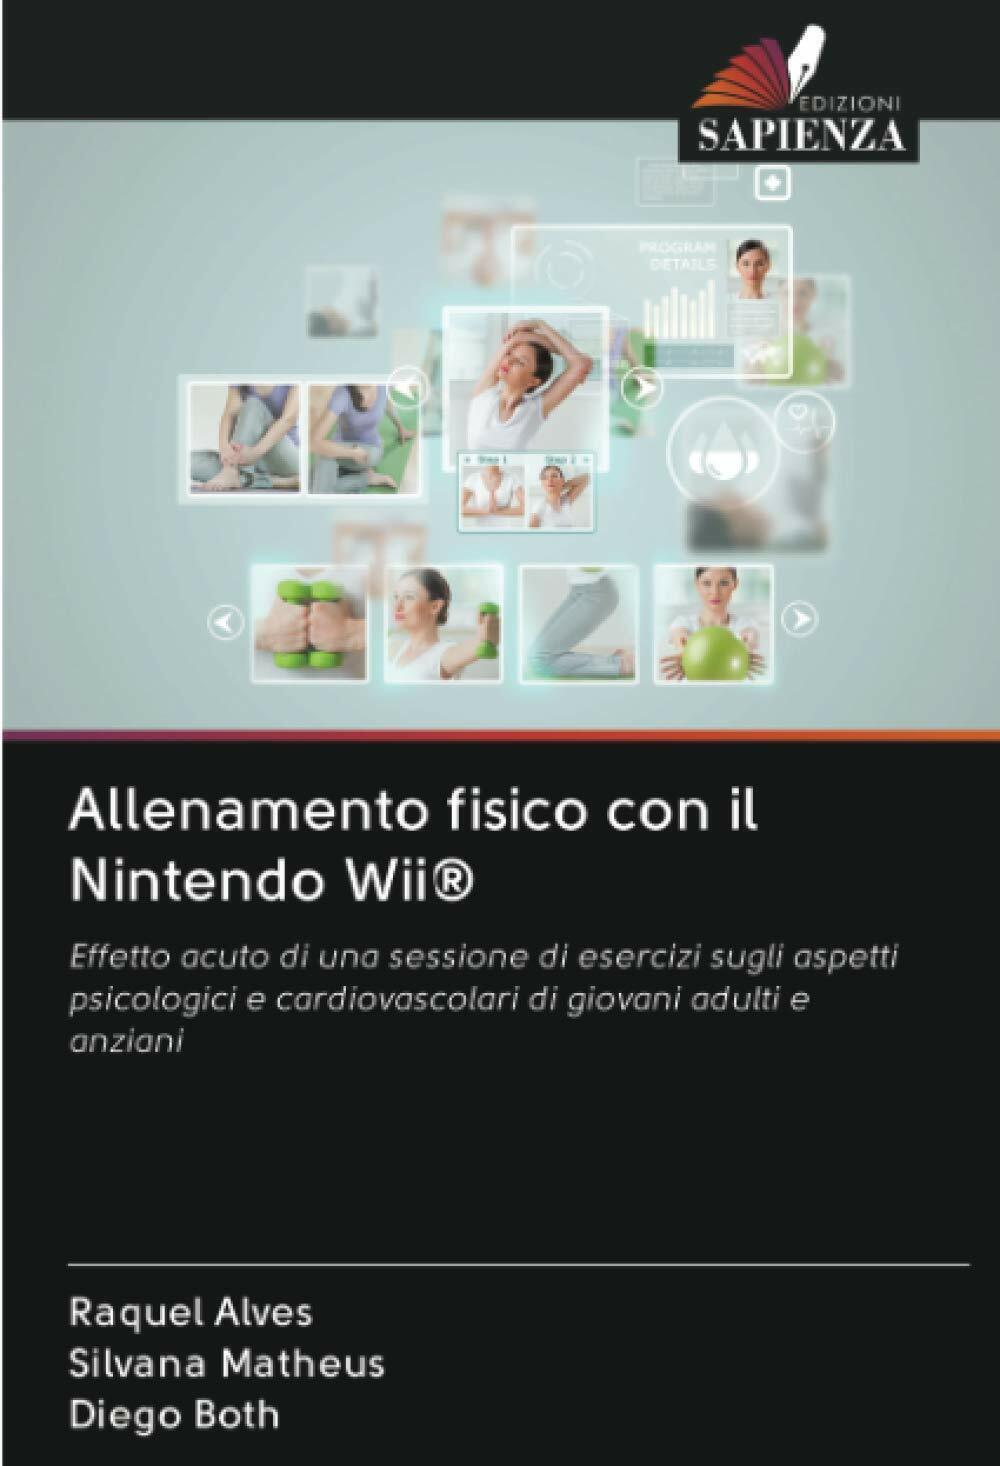 Allenamento fisico con il Nintendo Wii? - Alves,  Matheus, Both - Sapienza, 2020